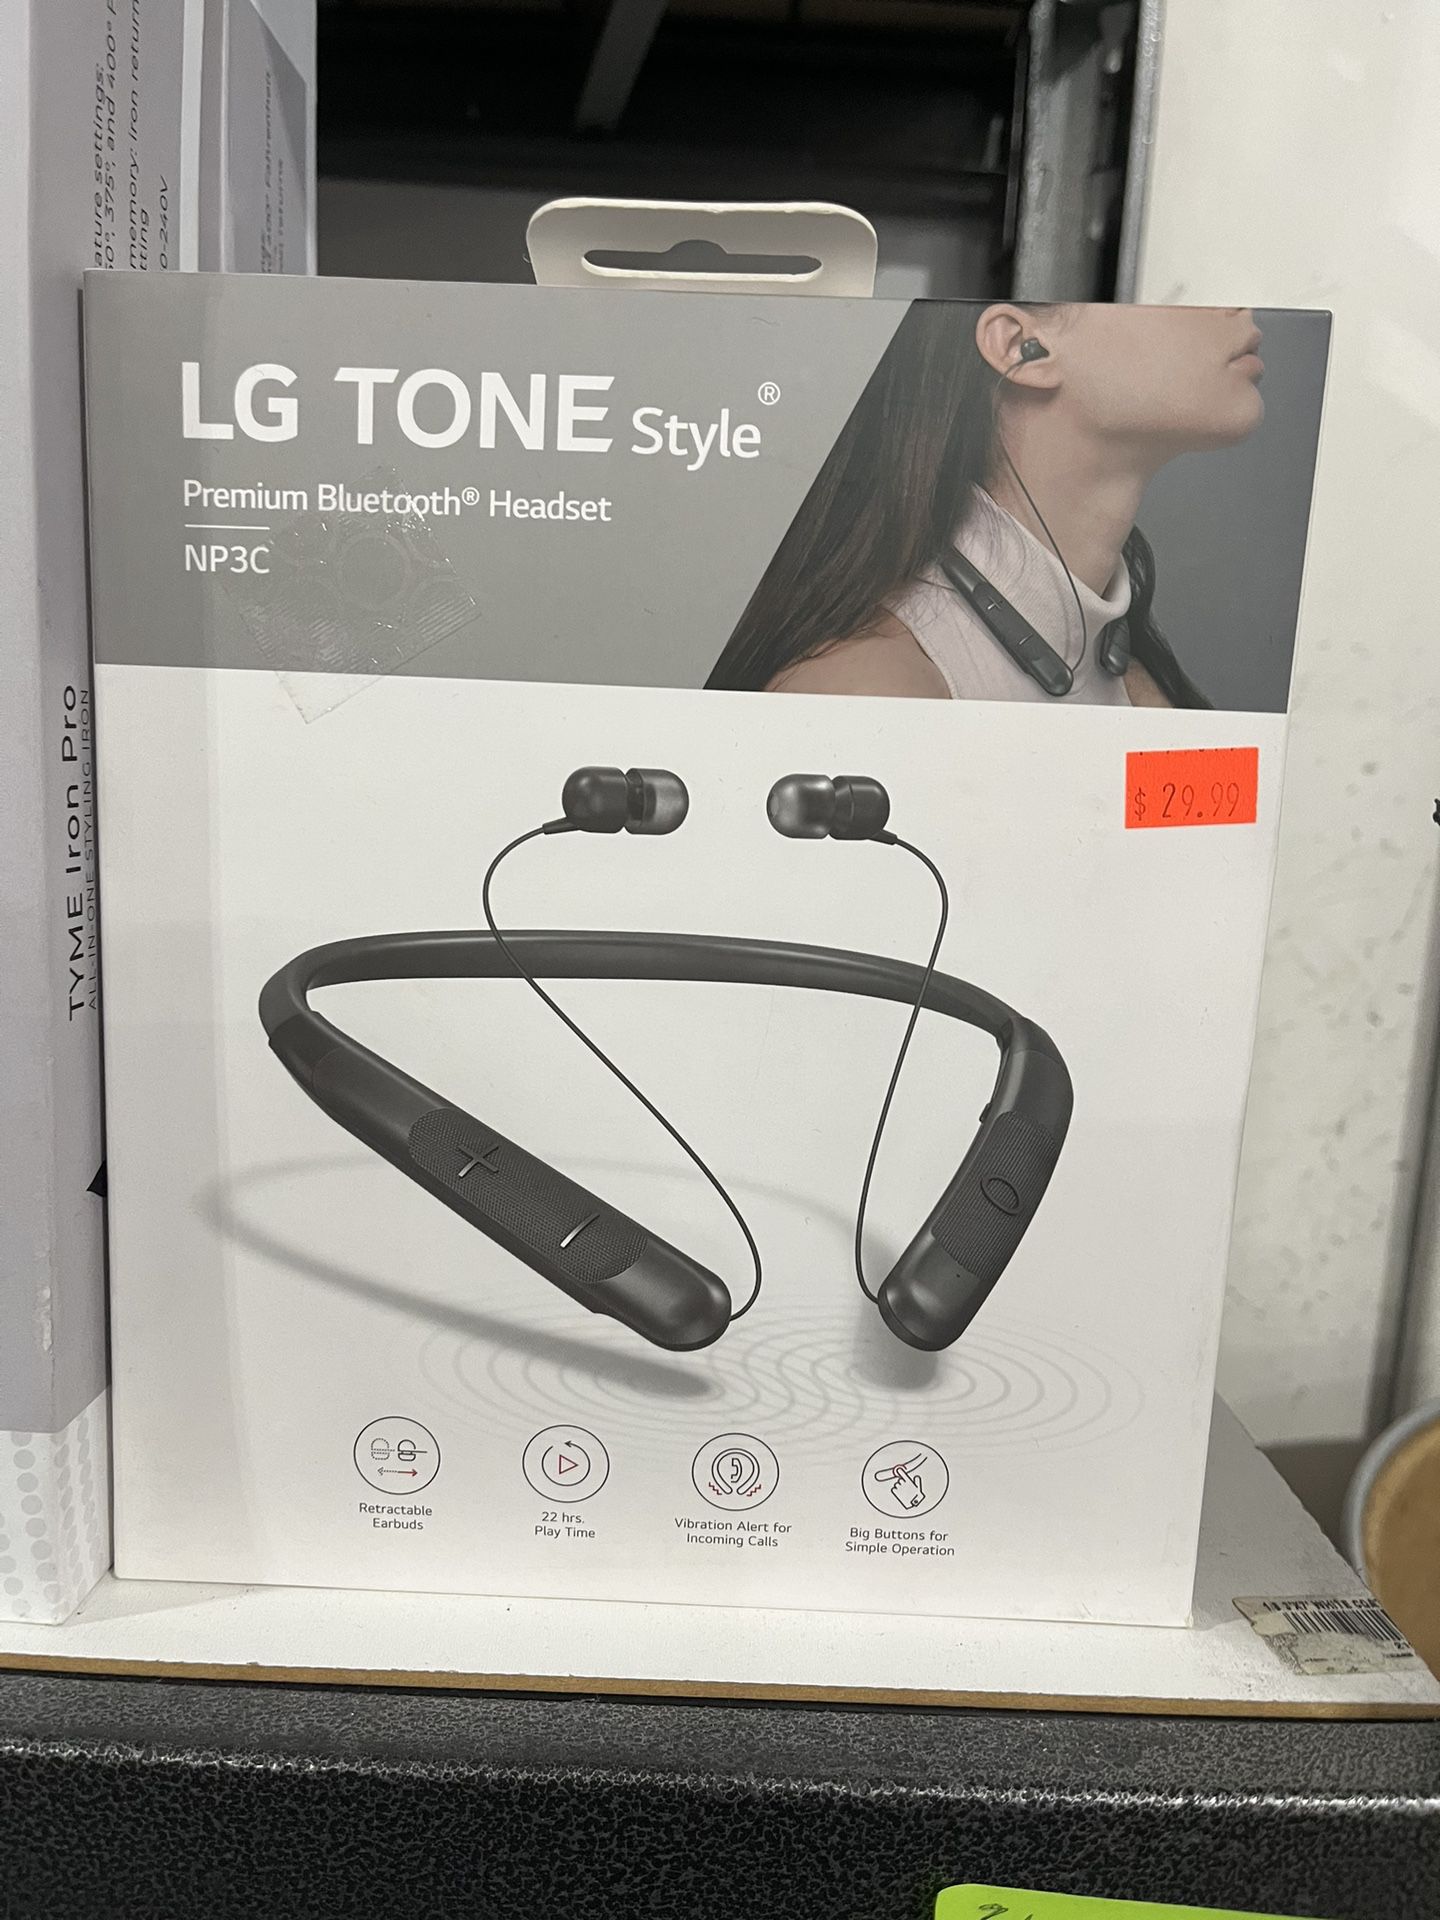 LG TONE Style® Premium Bluetooth® Headset NP3C $29.99